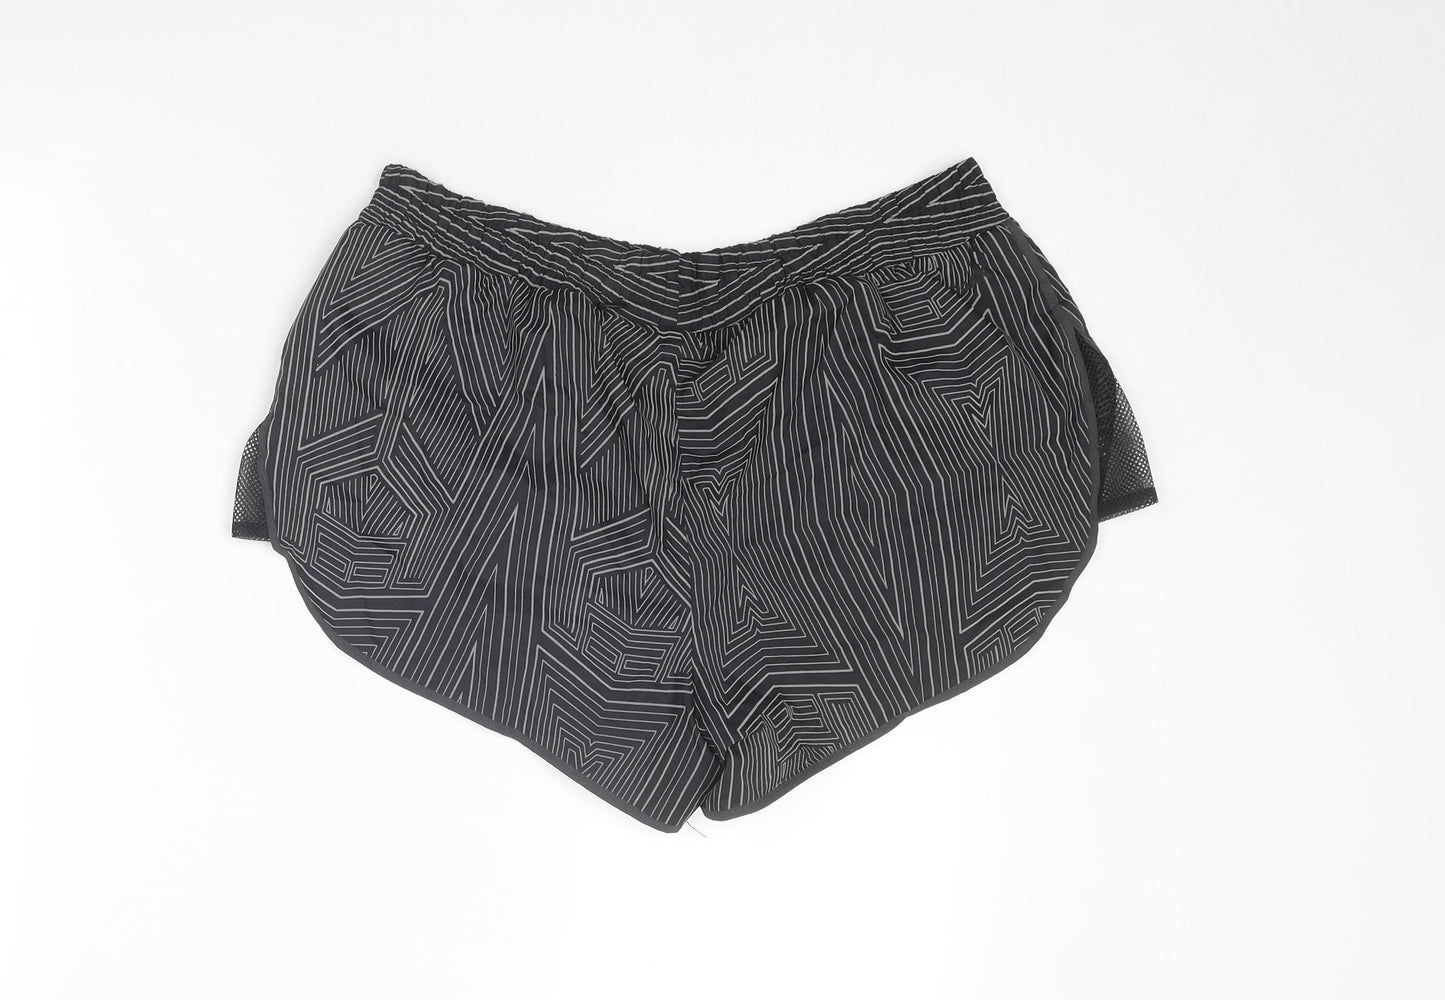 IVY PARK Womens Black Geometric Polyester Athletic Shorts Size L Regular